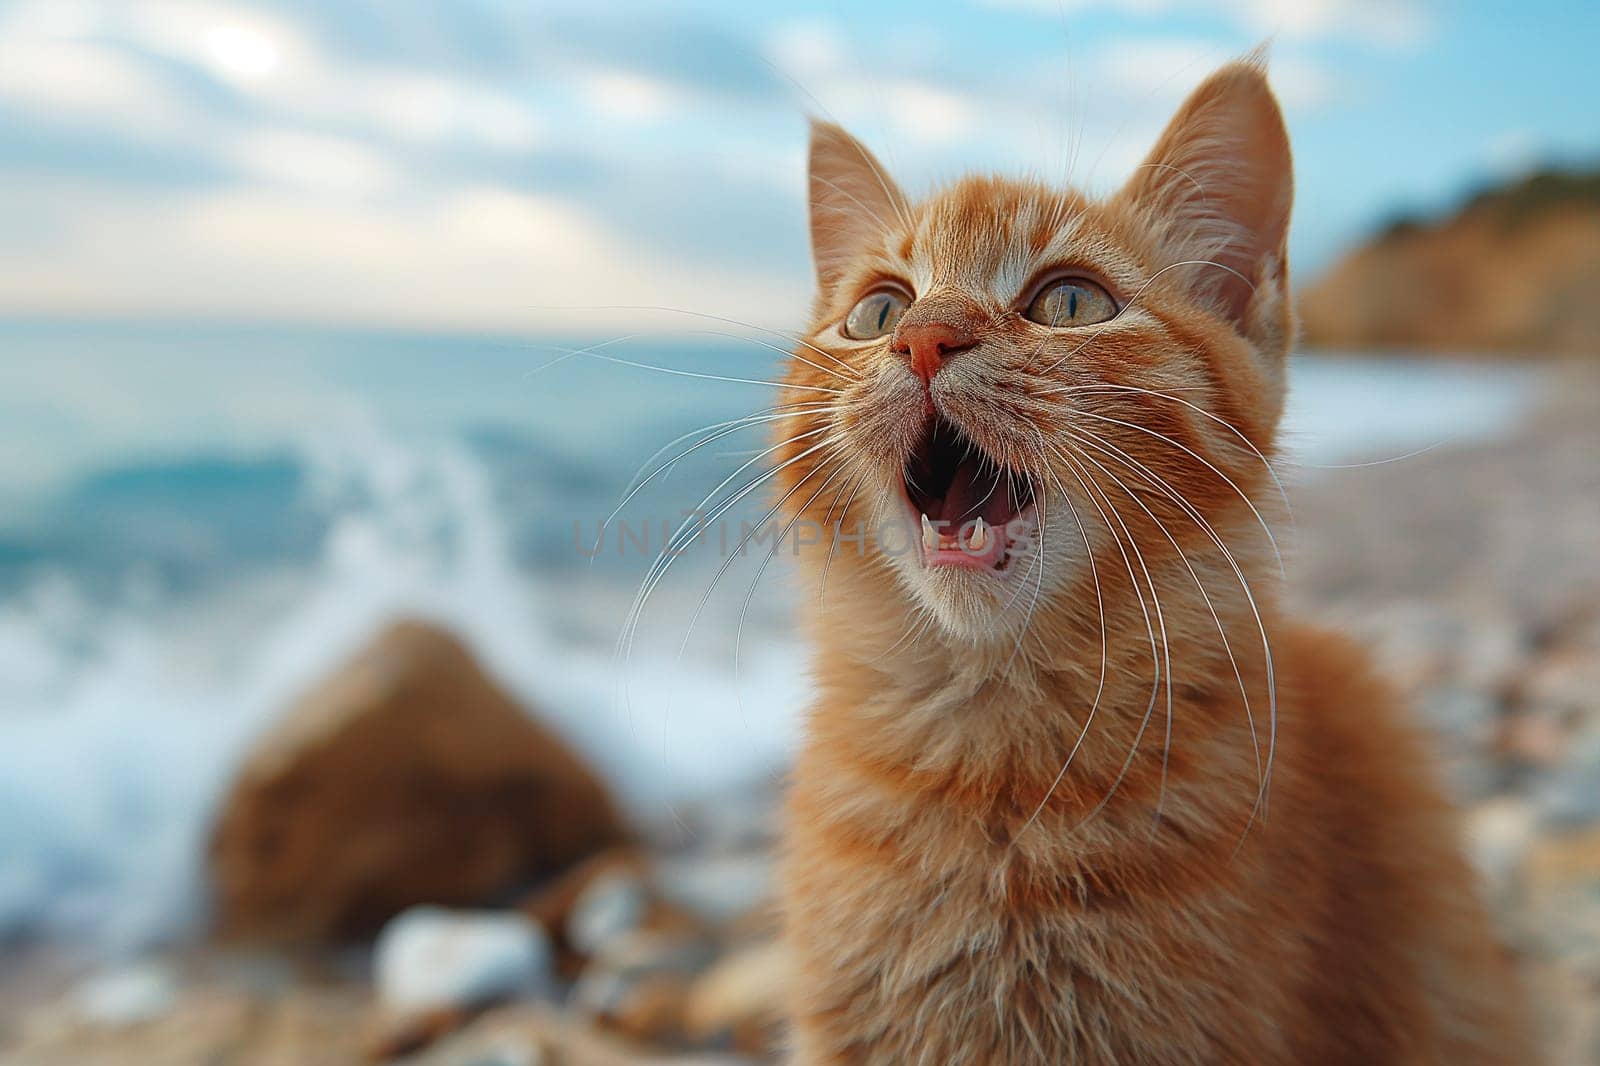 A surprise orange cat, yawing feline at beach, on sand